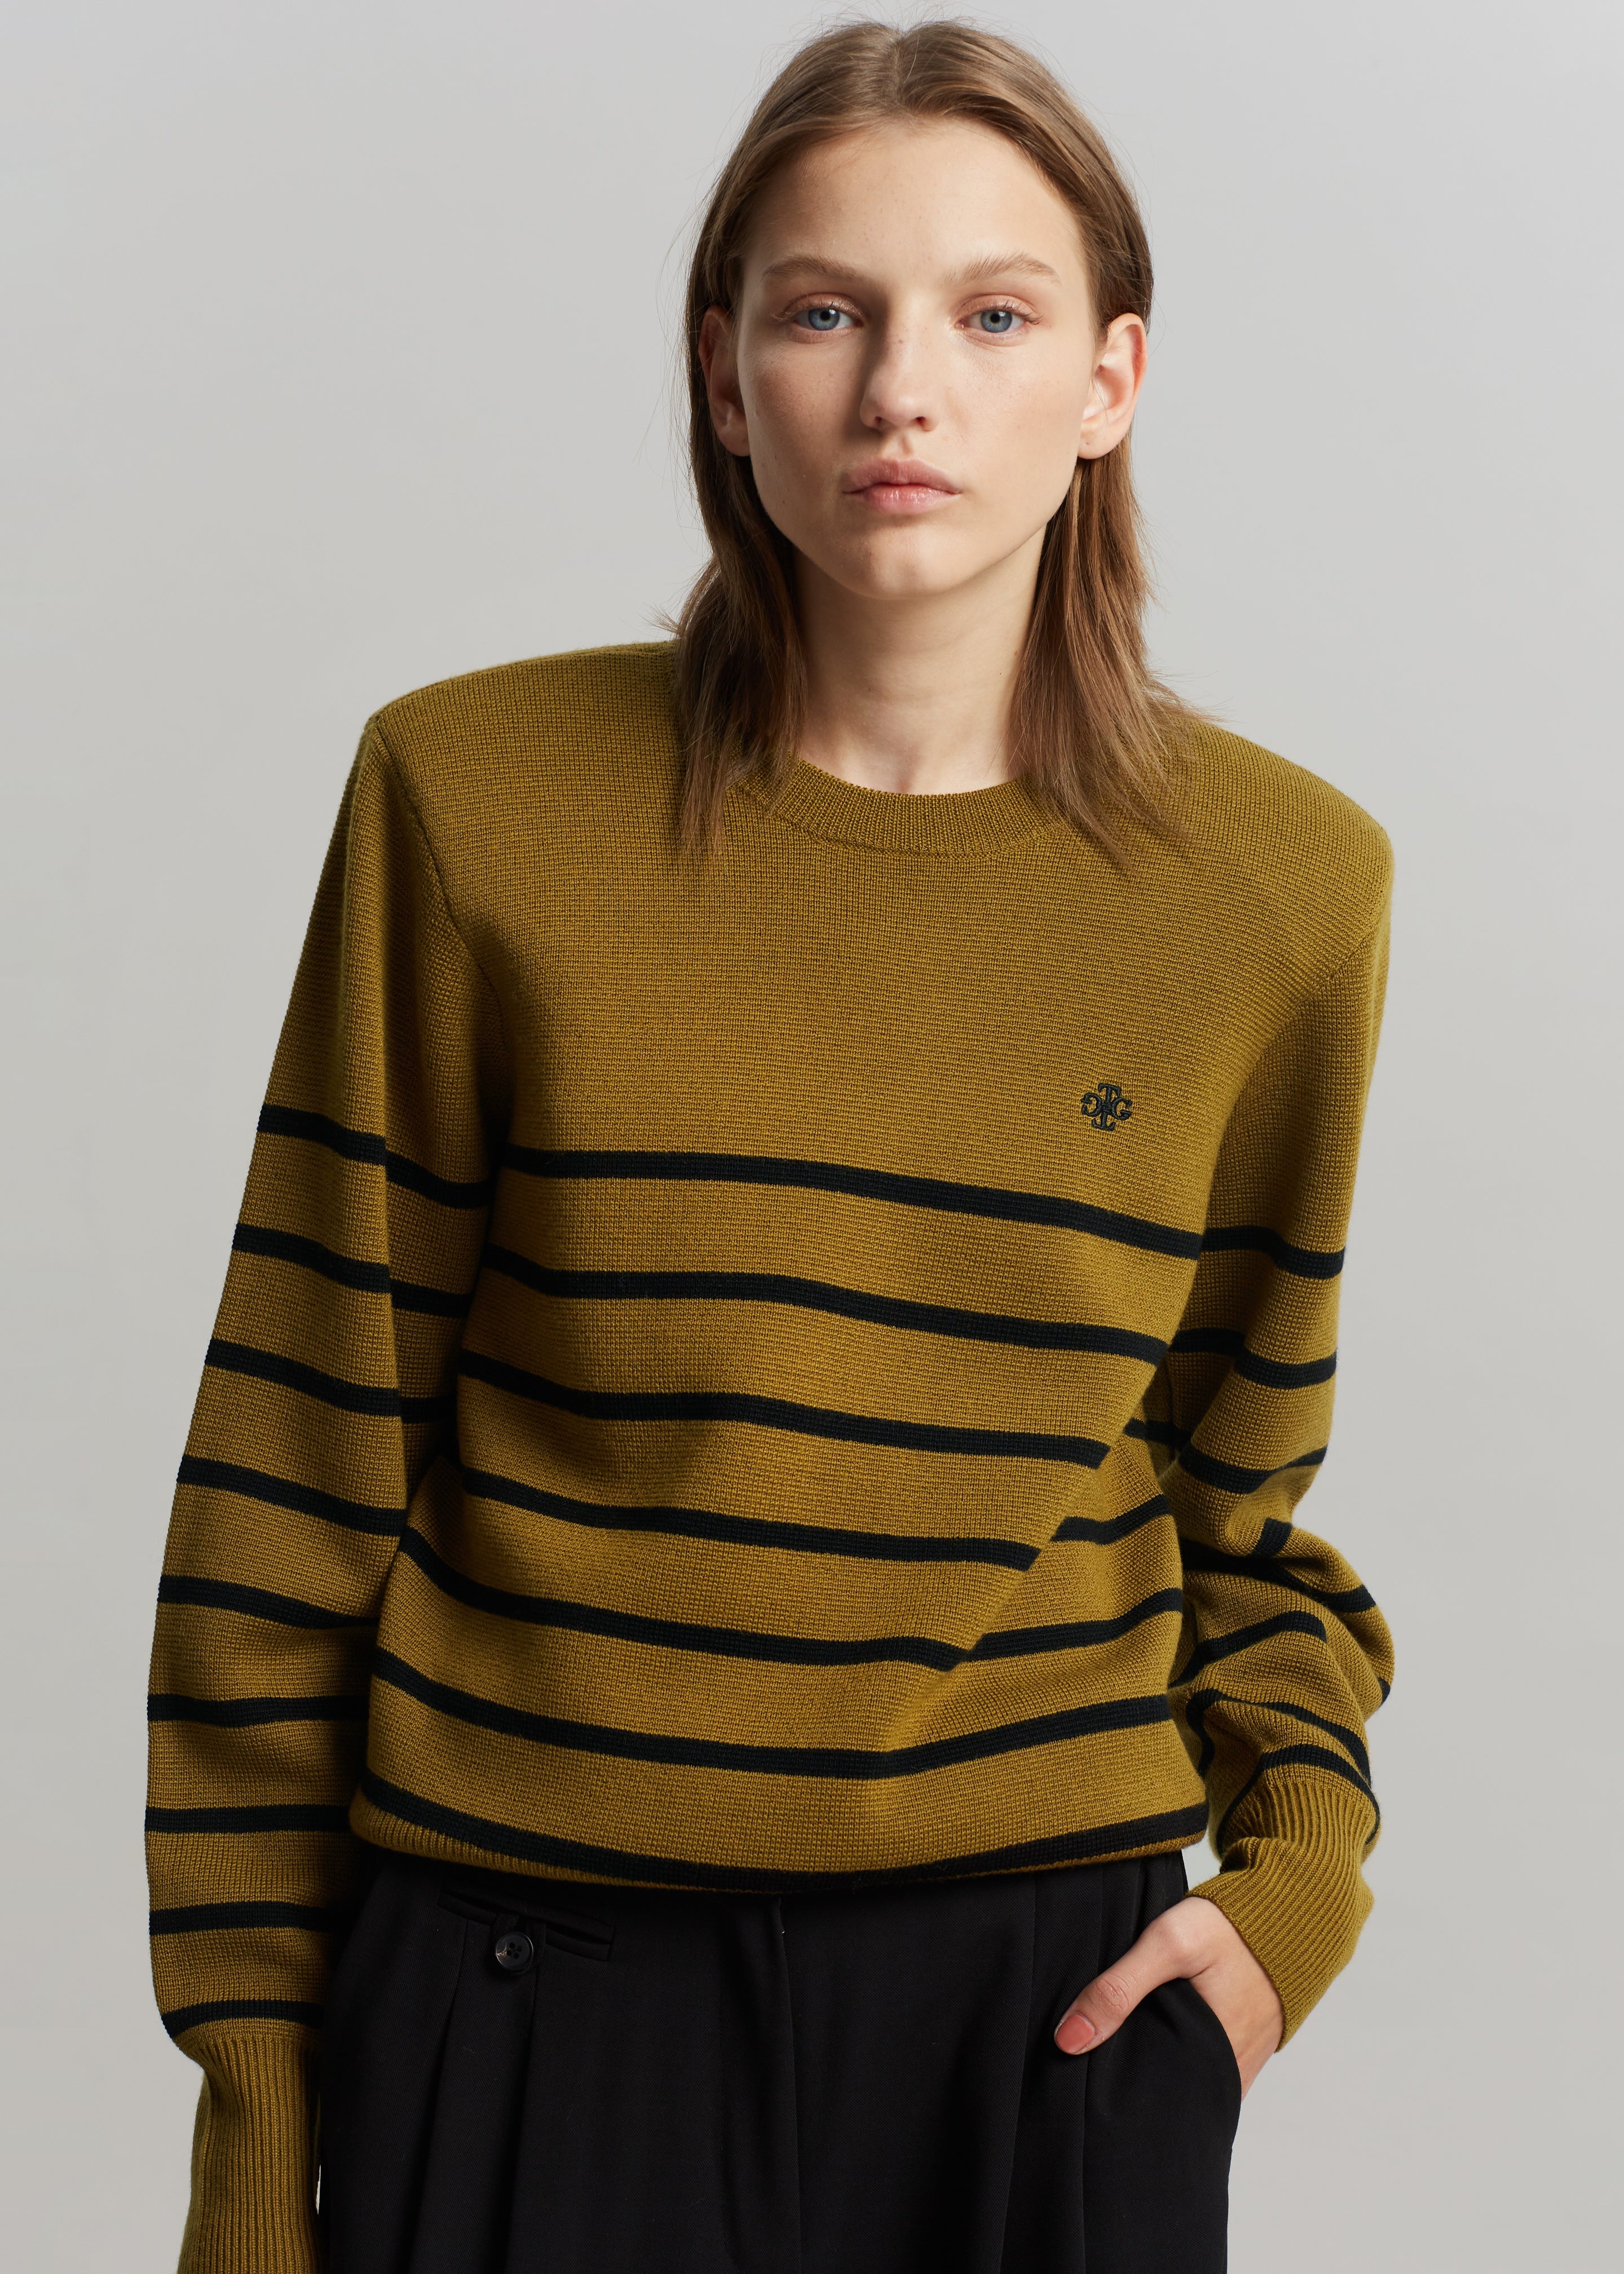 The Garment St Moritz Sweater - Mustard/Black Stripes - 4